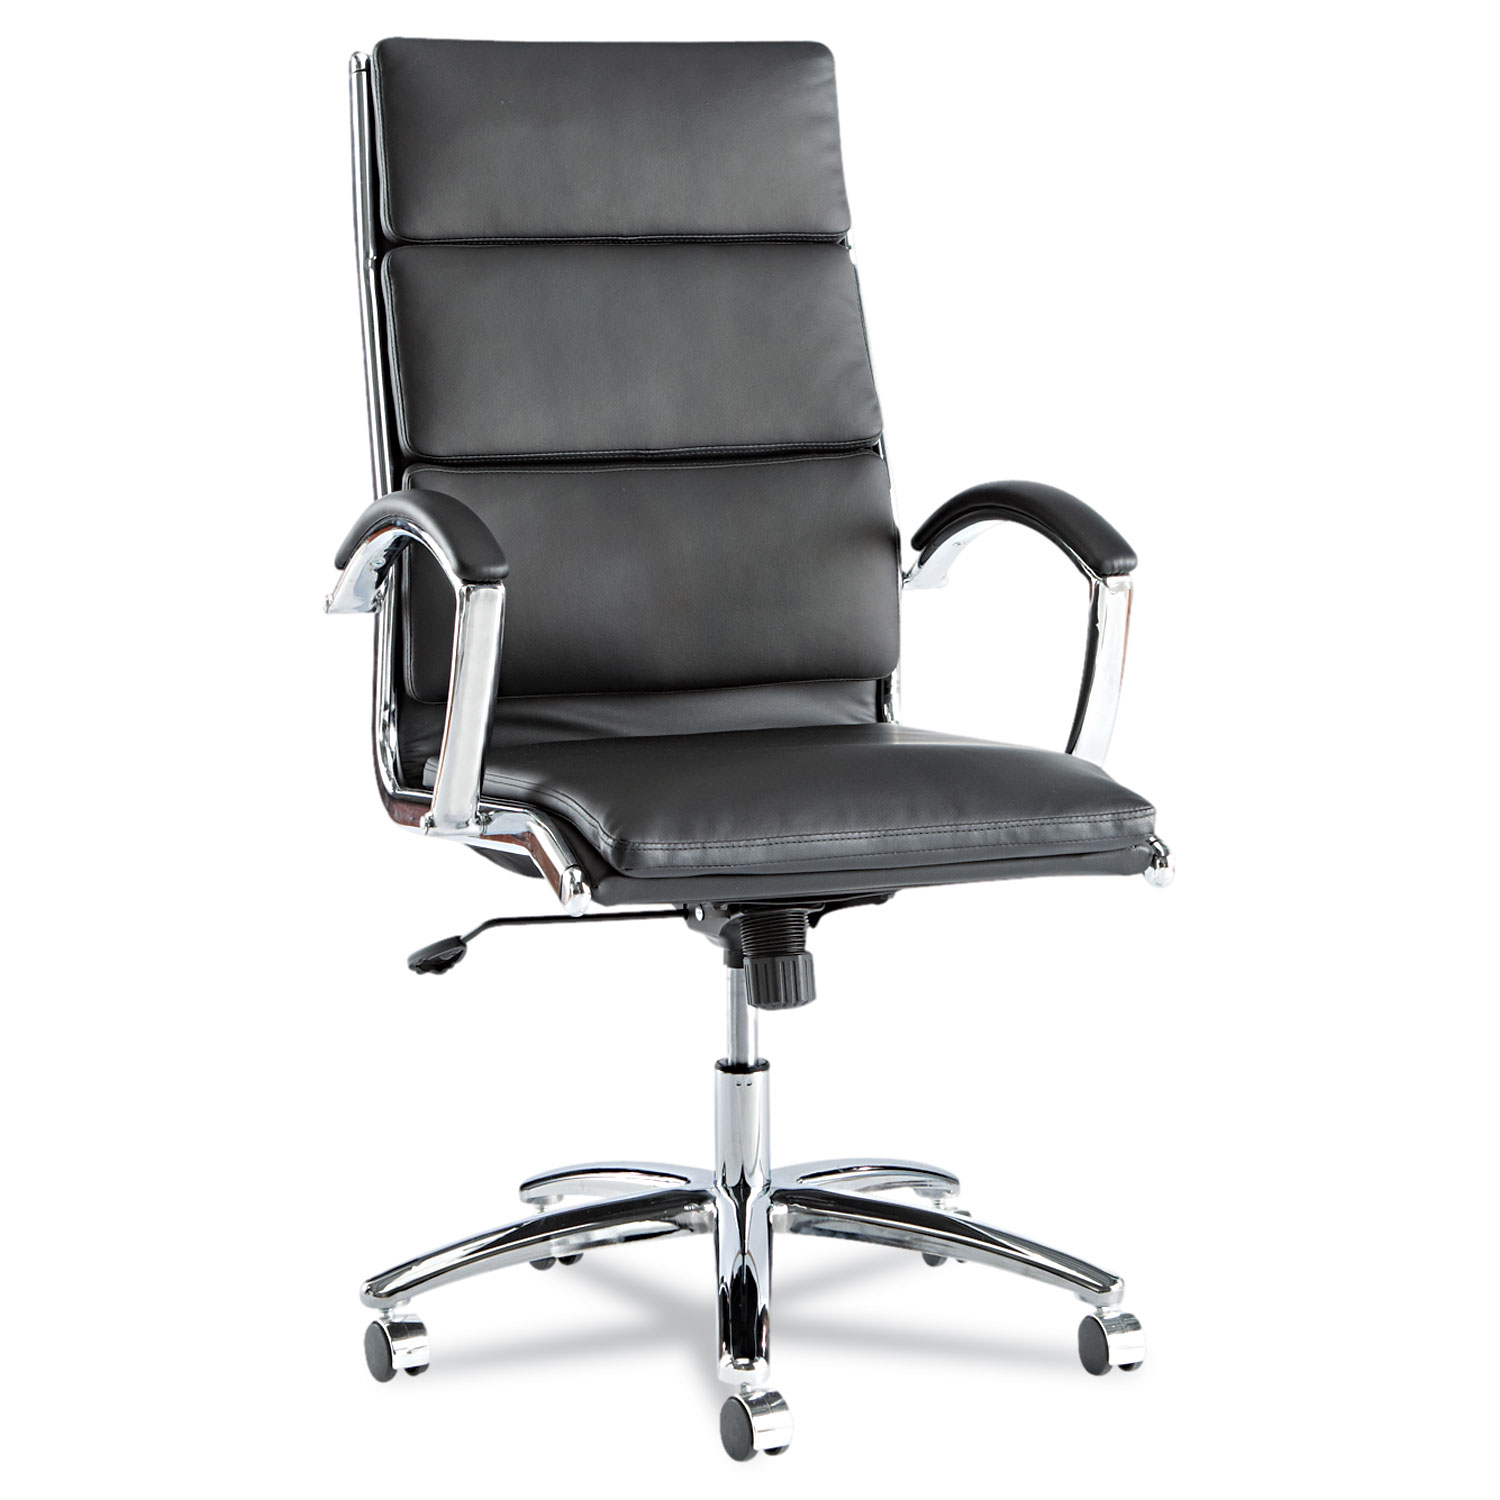 Alera Neratoli High-Back Slim Profile Chair, Faux Leather, 275 lb Cap, 17.32" to 21.25" Seat Height, Black Seat/Back, Chrome - image 1 of 10